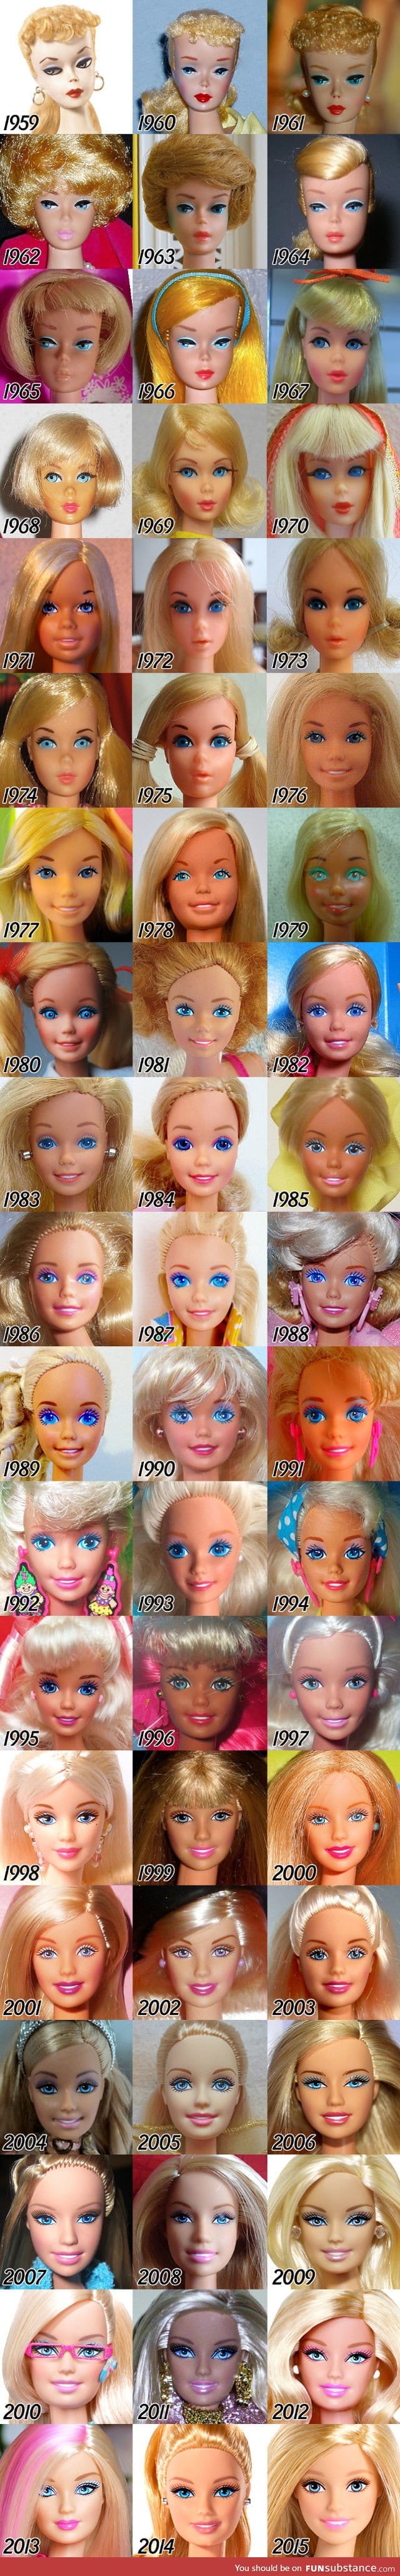 Barbie 1959 - 2015